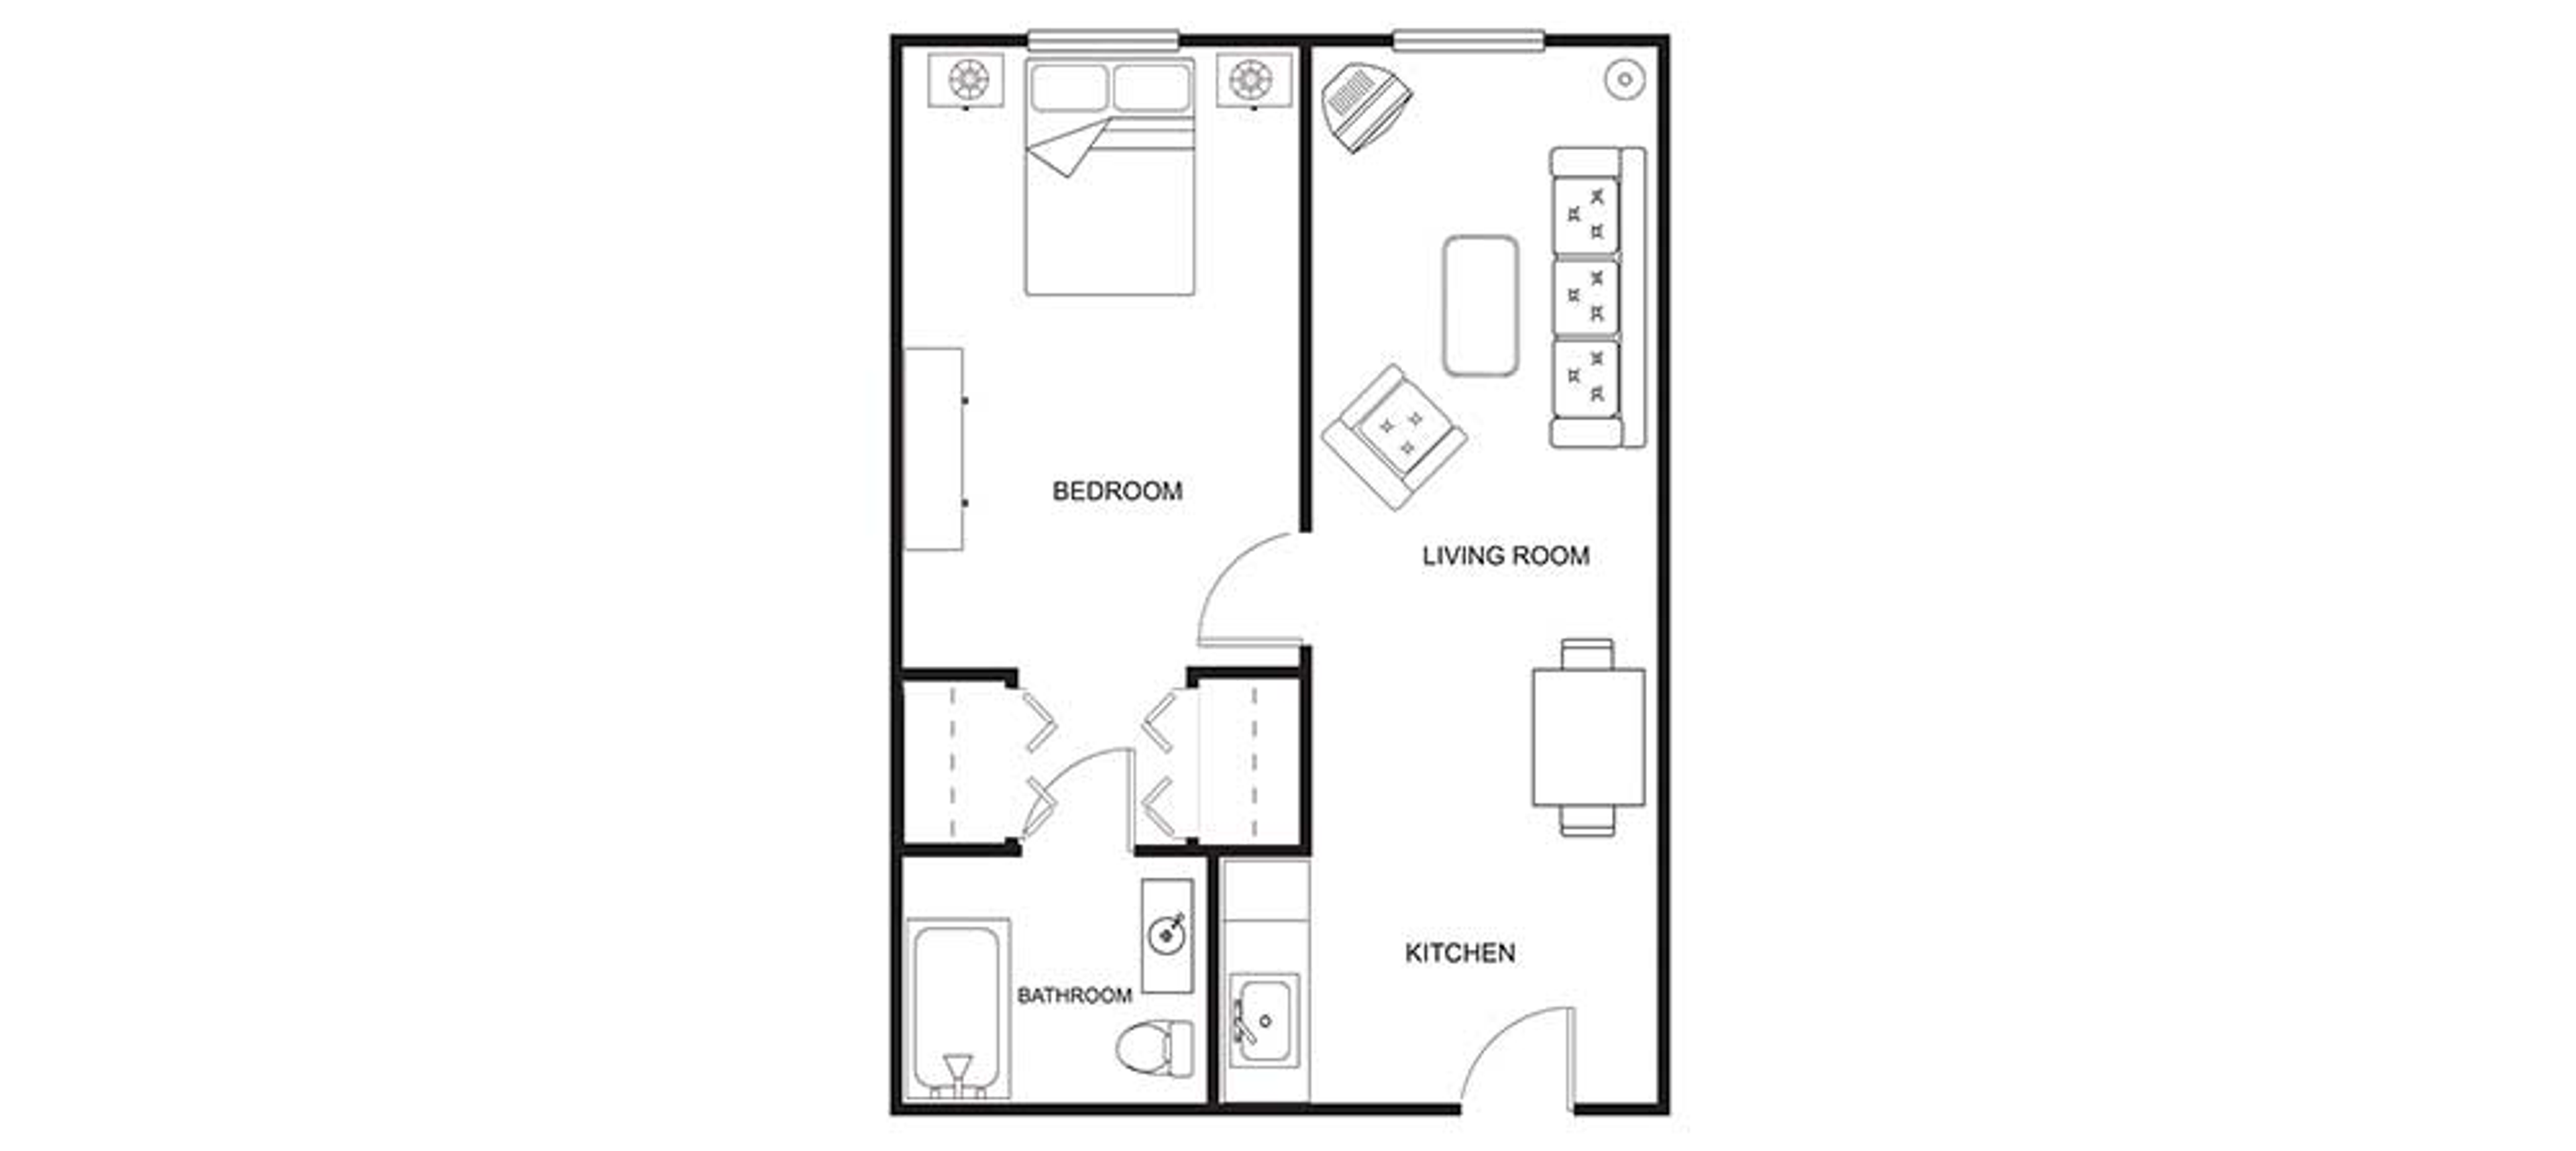 Floorplan - Bay Side Terrace - 1B 1B B1